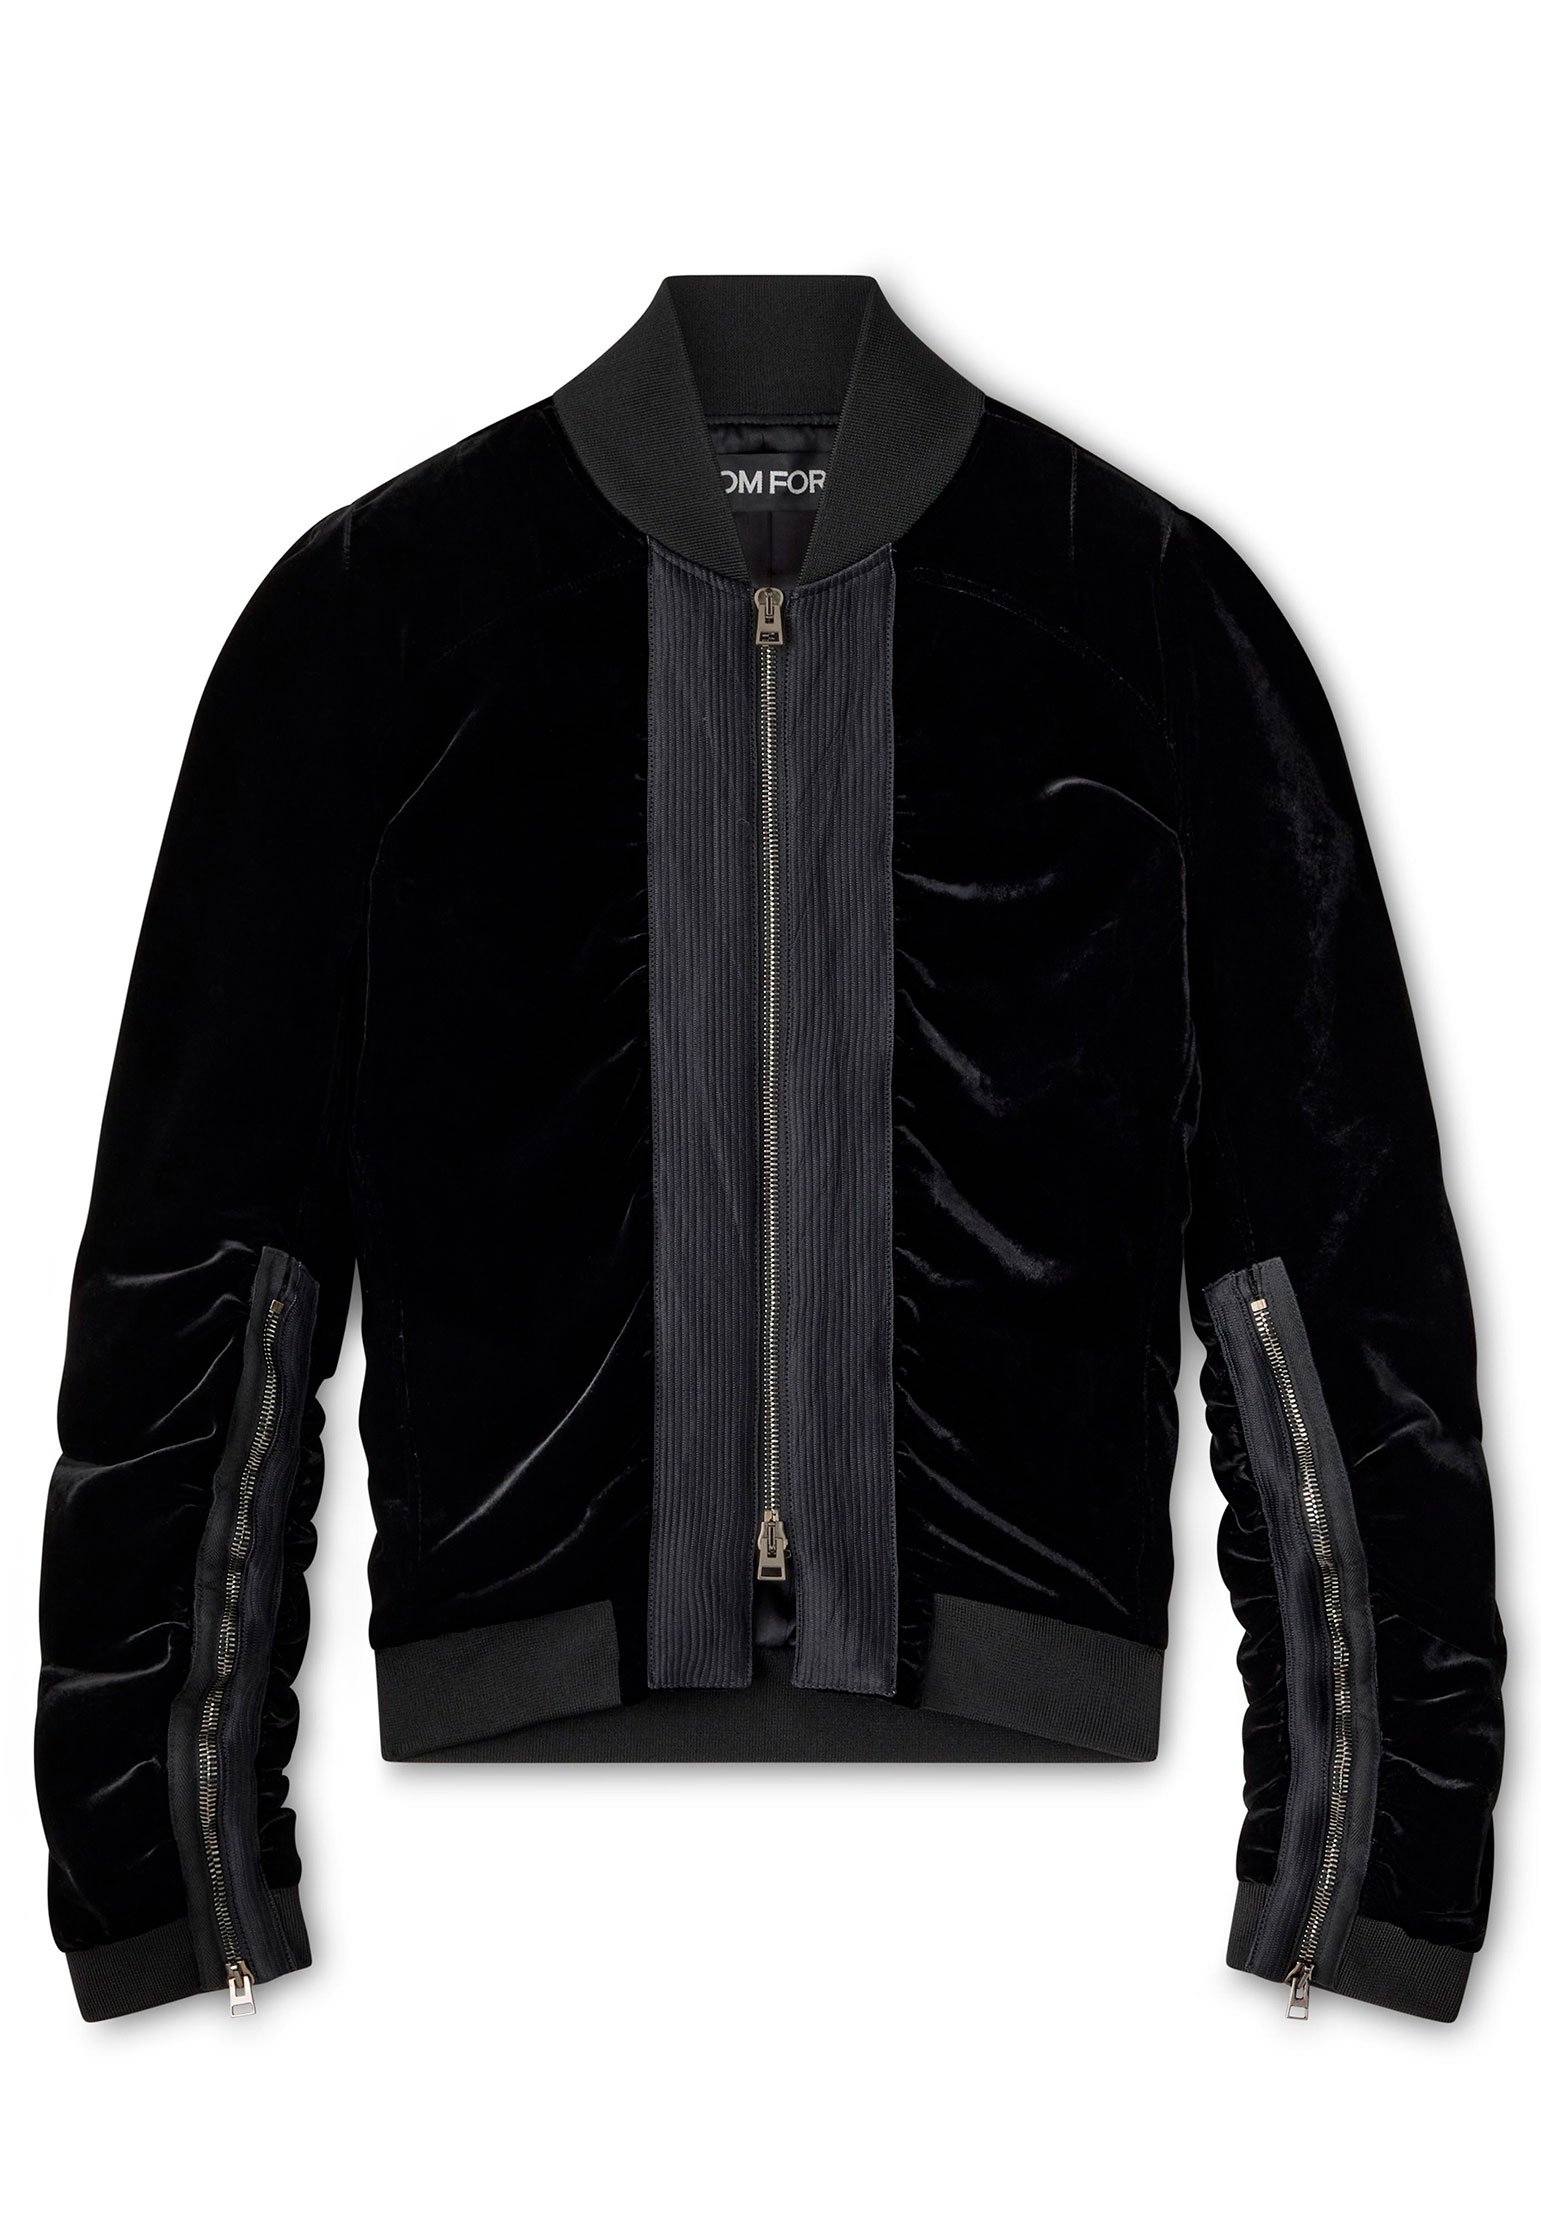 Bomber jacket TOM FORD color: black buy online store of branded clothing  Allure